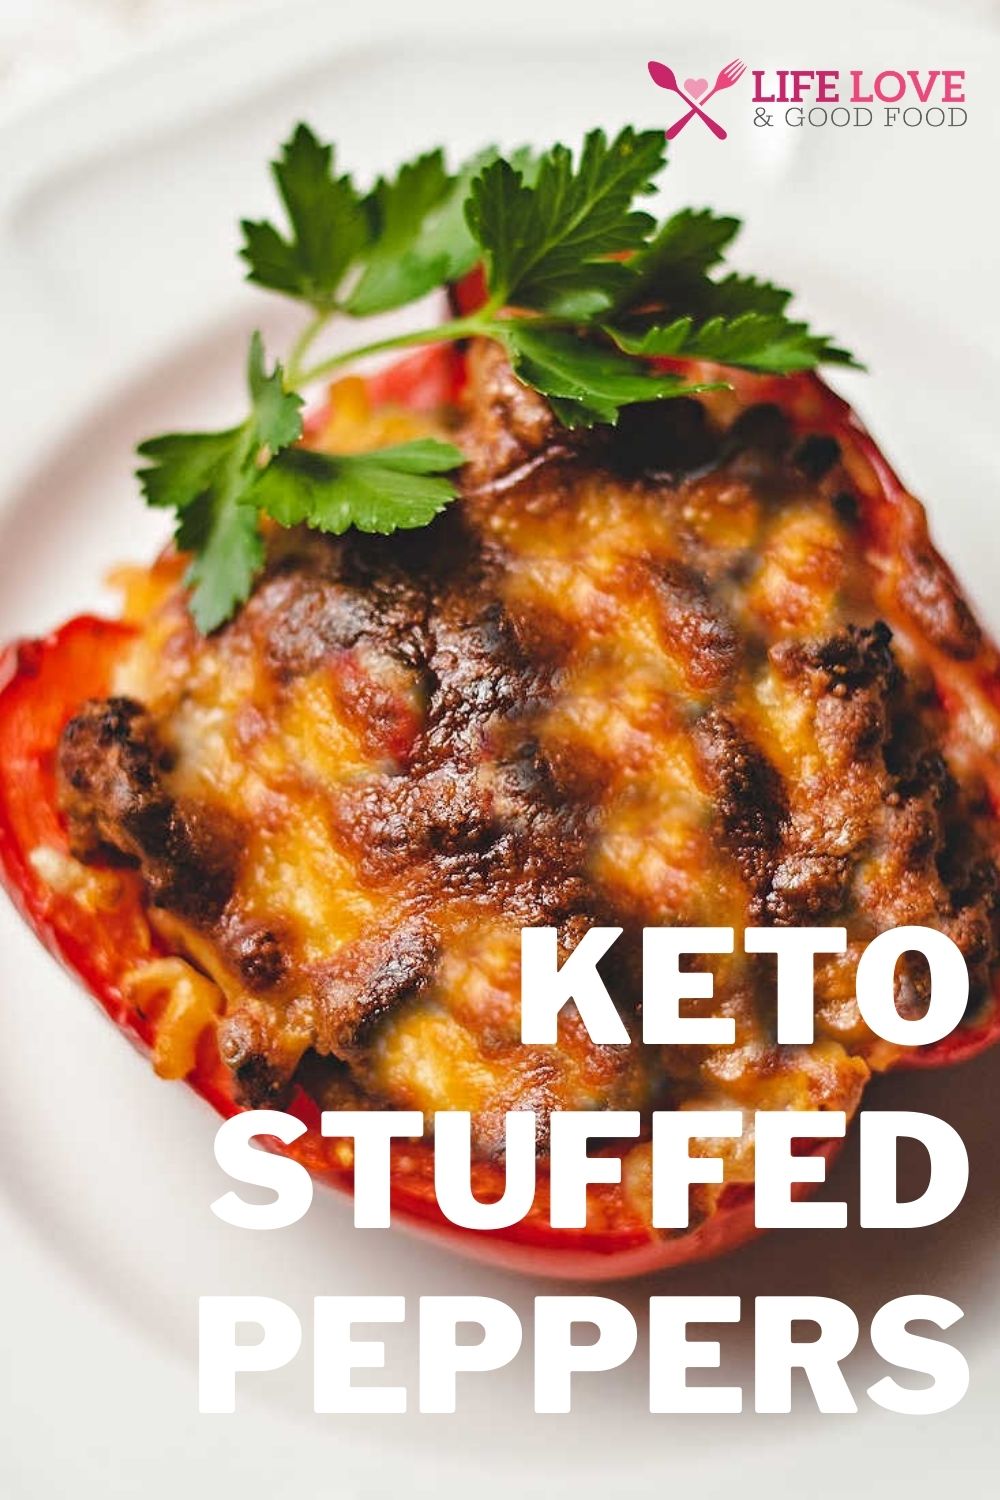 Keto Stuffed Peppers - Life, Love, and Good Food